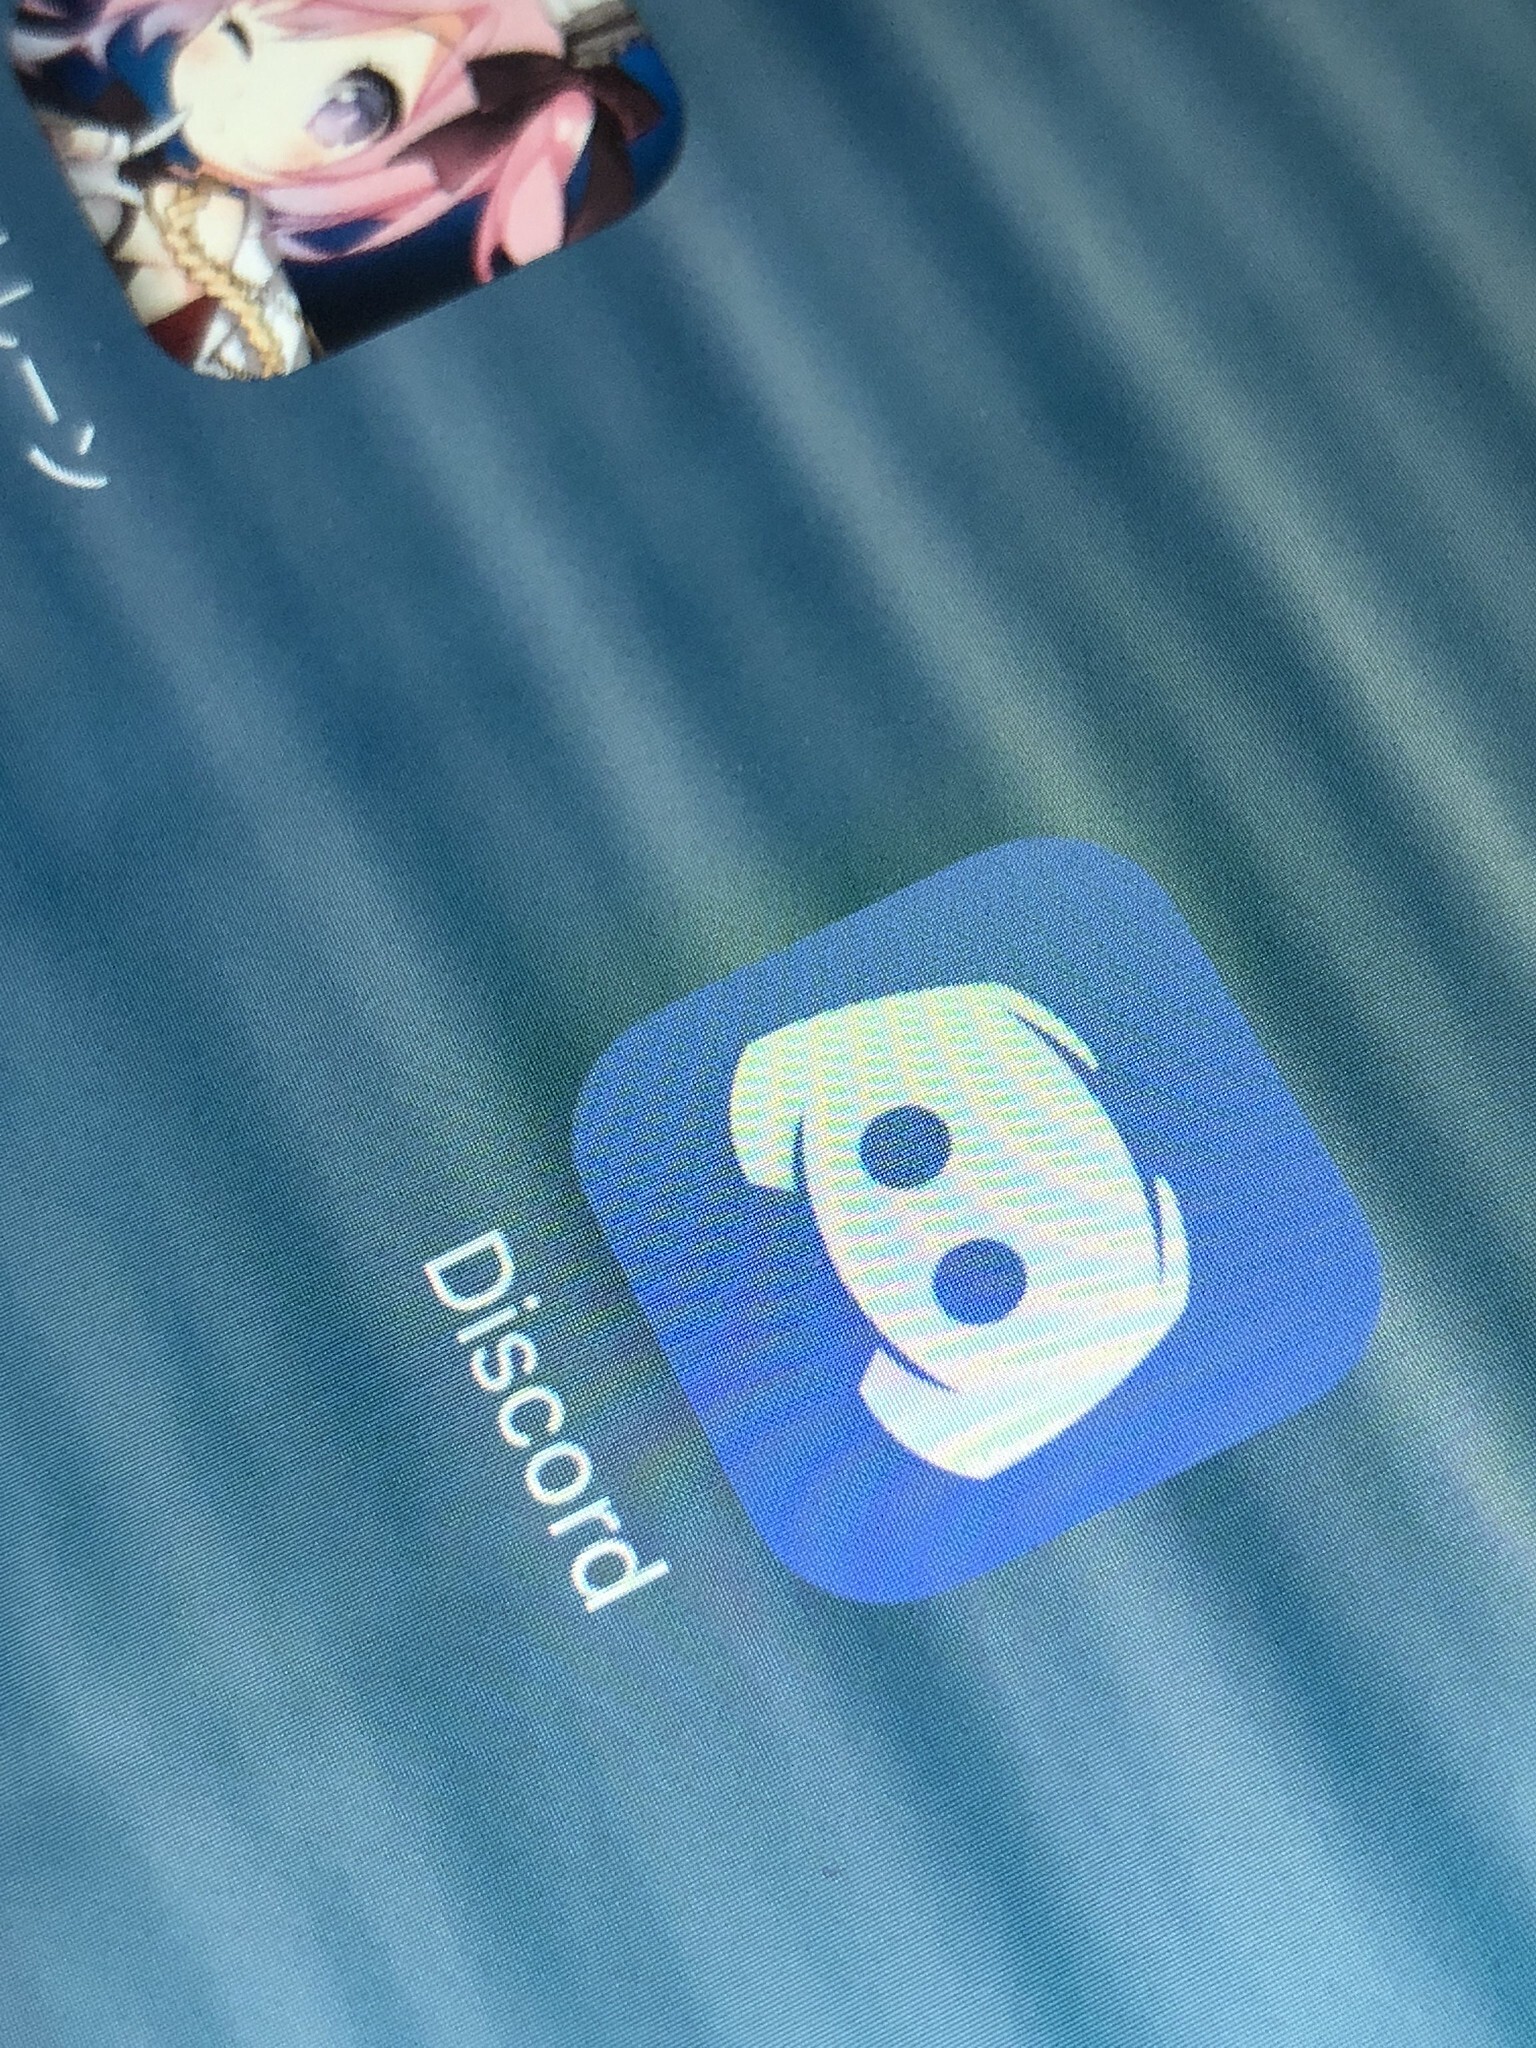 discord app